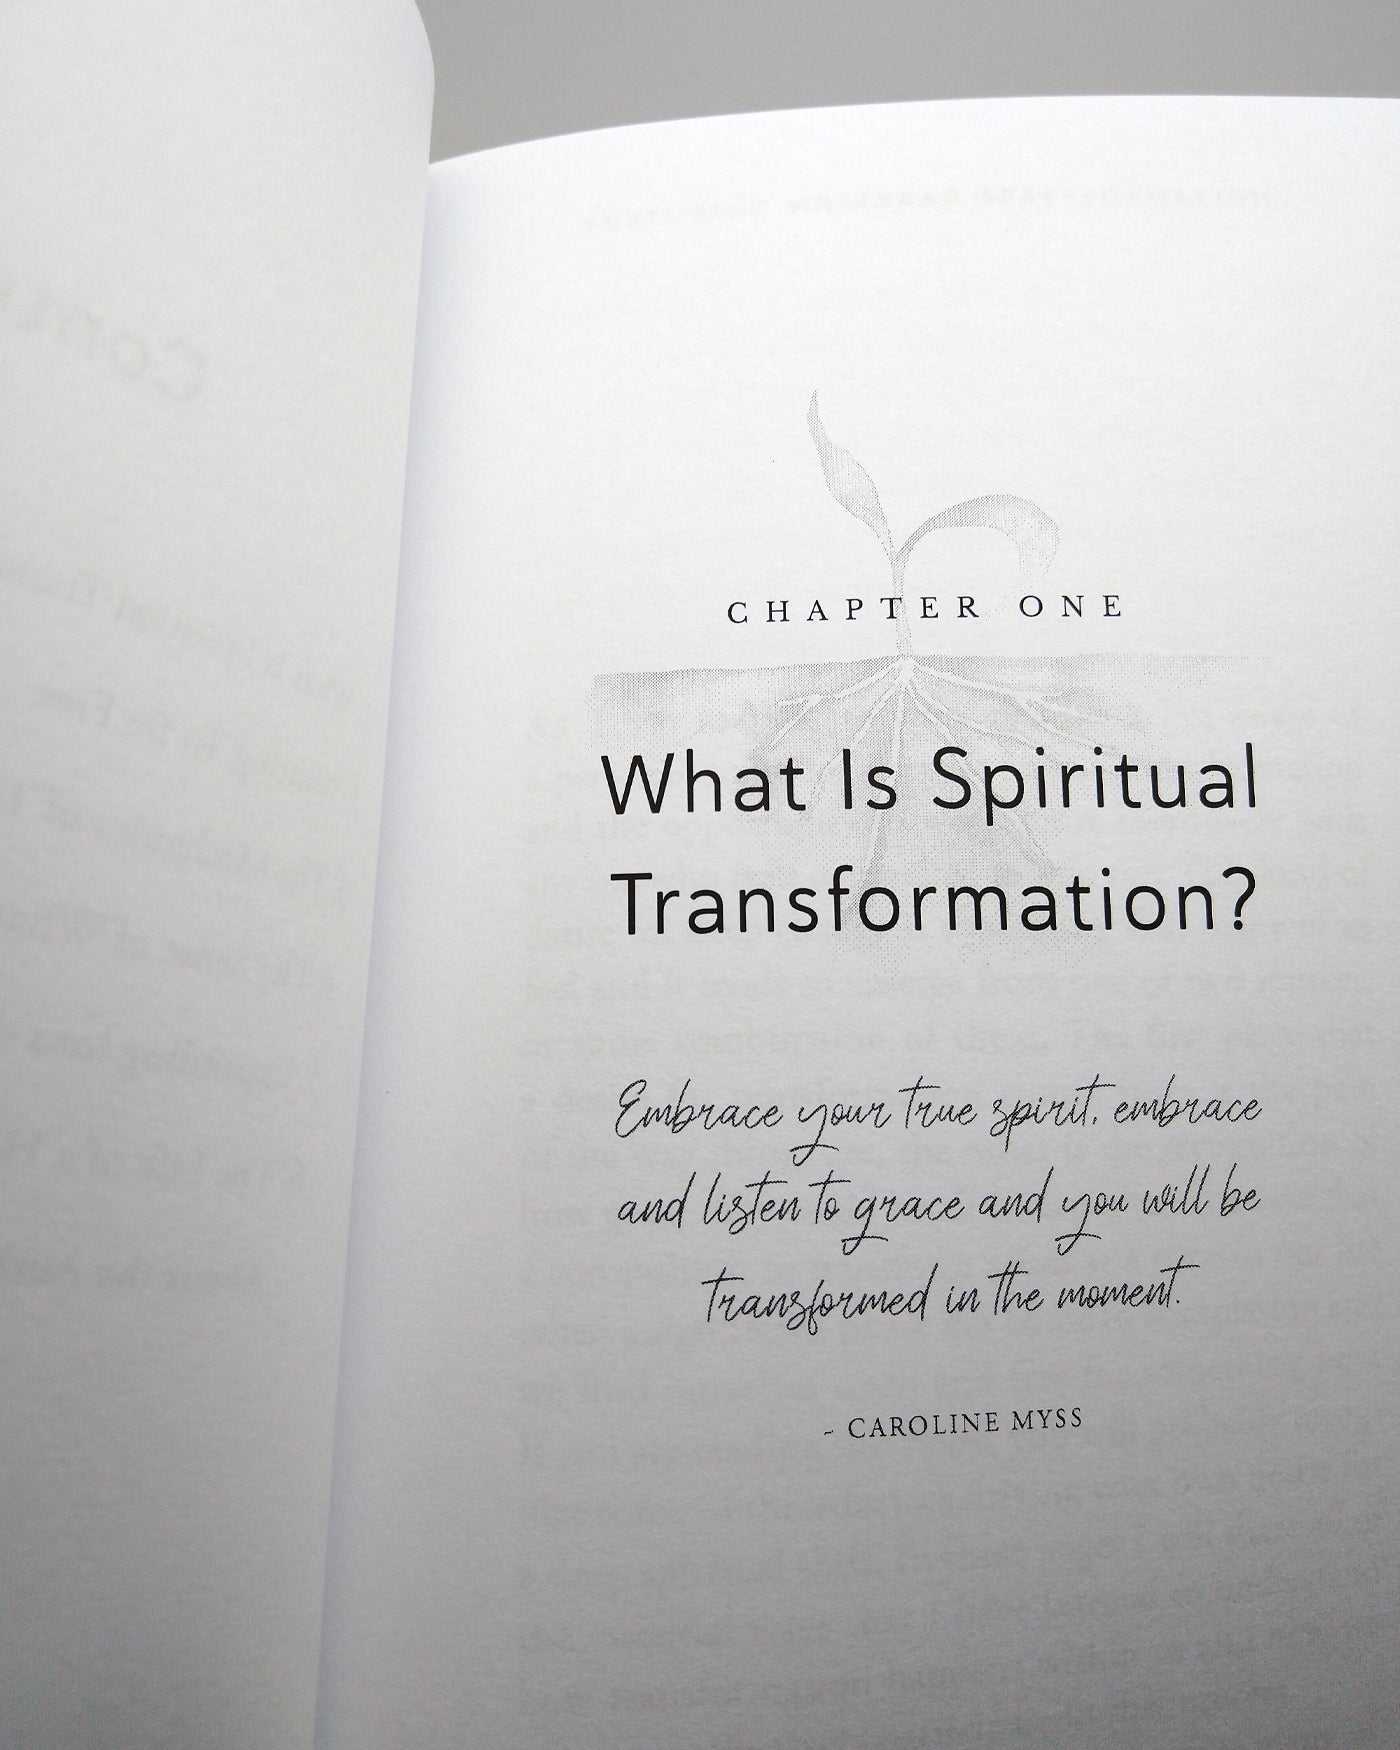 Nurturing Spiritual Transformation: A simple book about radical change